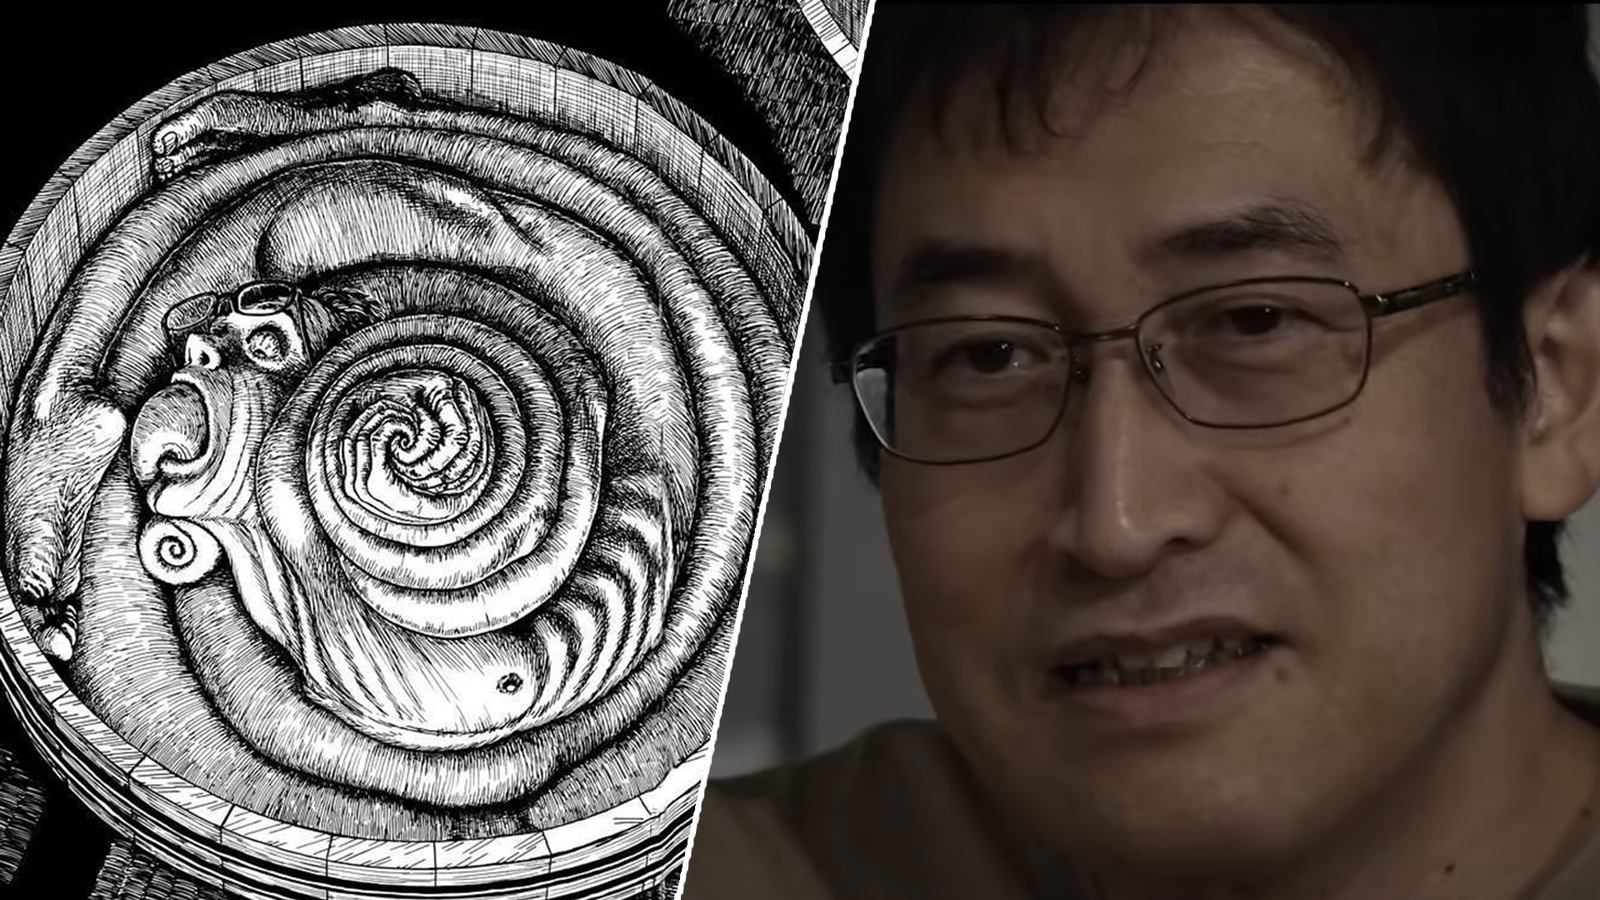 Manga creator Junji Ito talks horror and humor